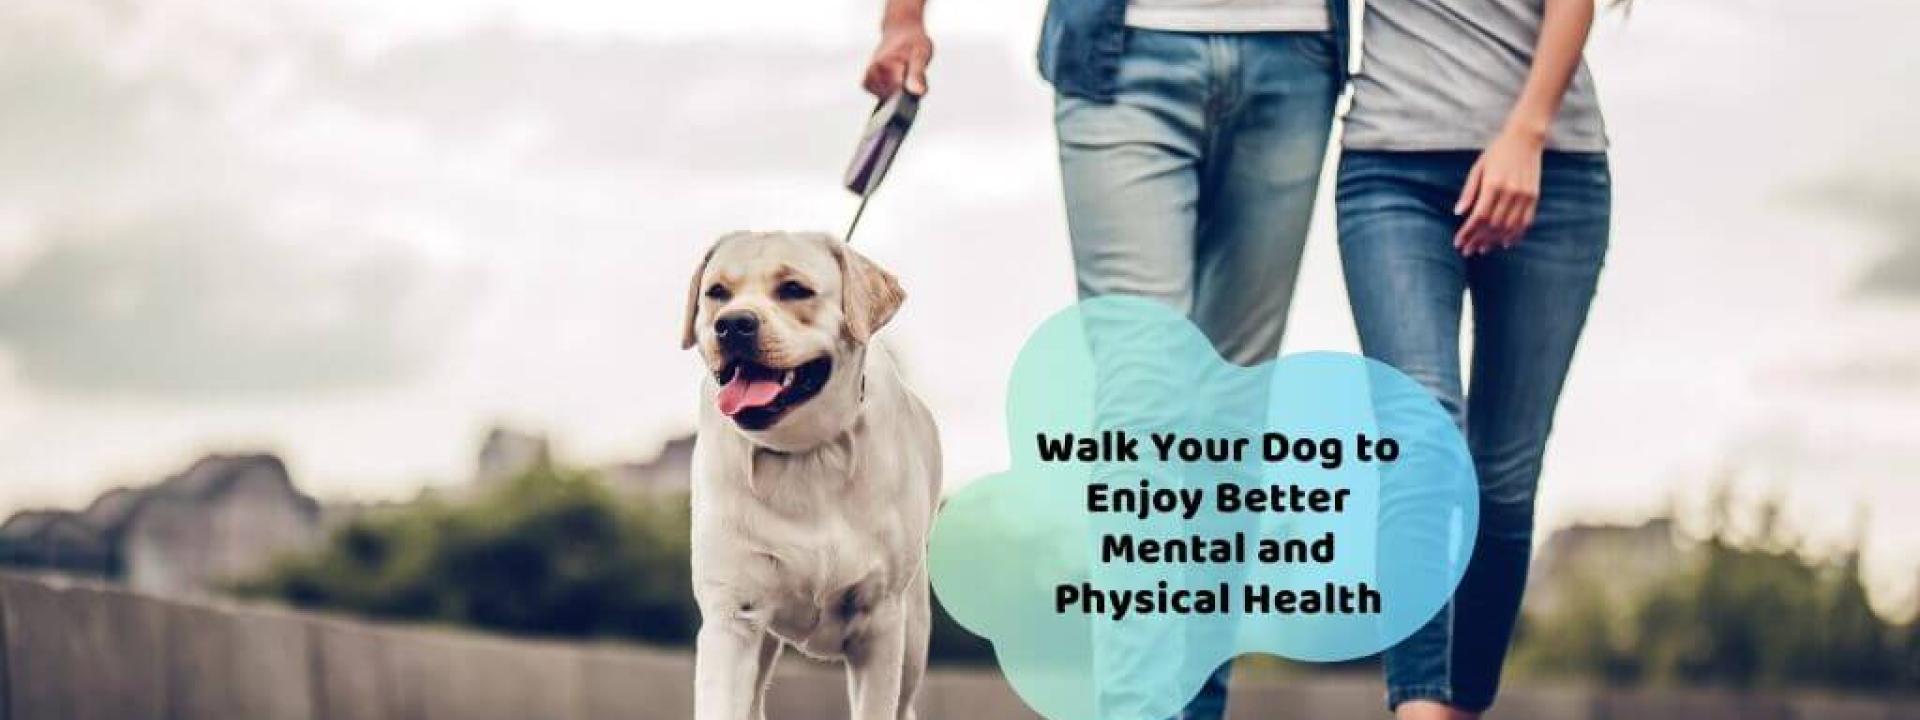 walk-dog-better-physical-mental-health.jpg